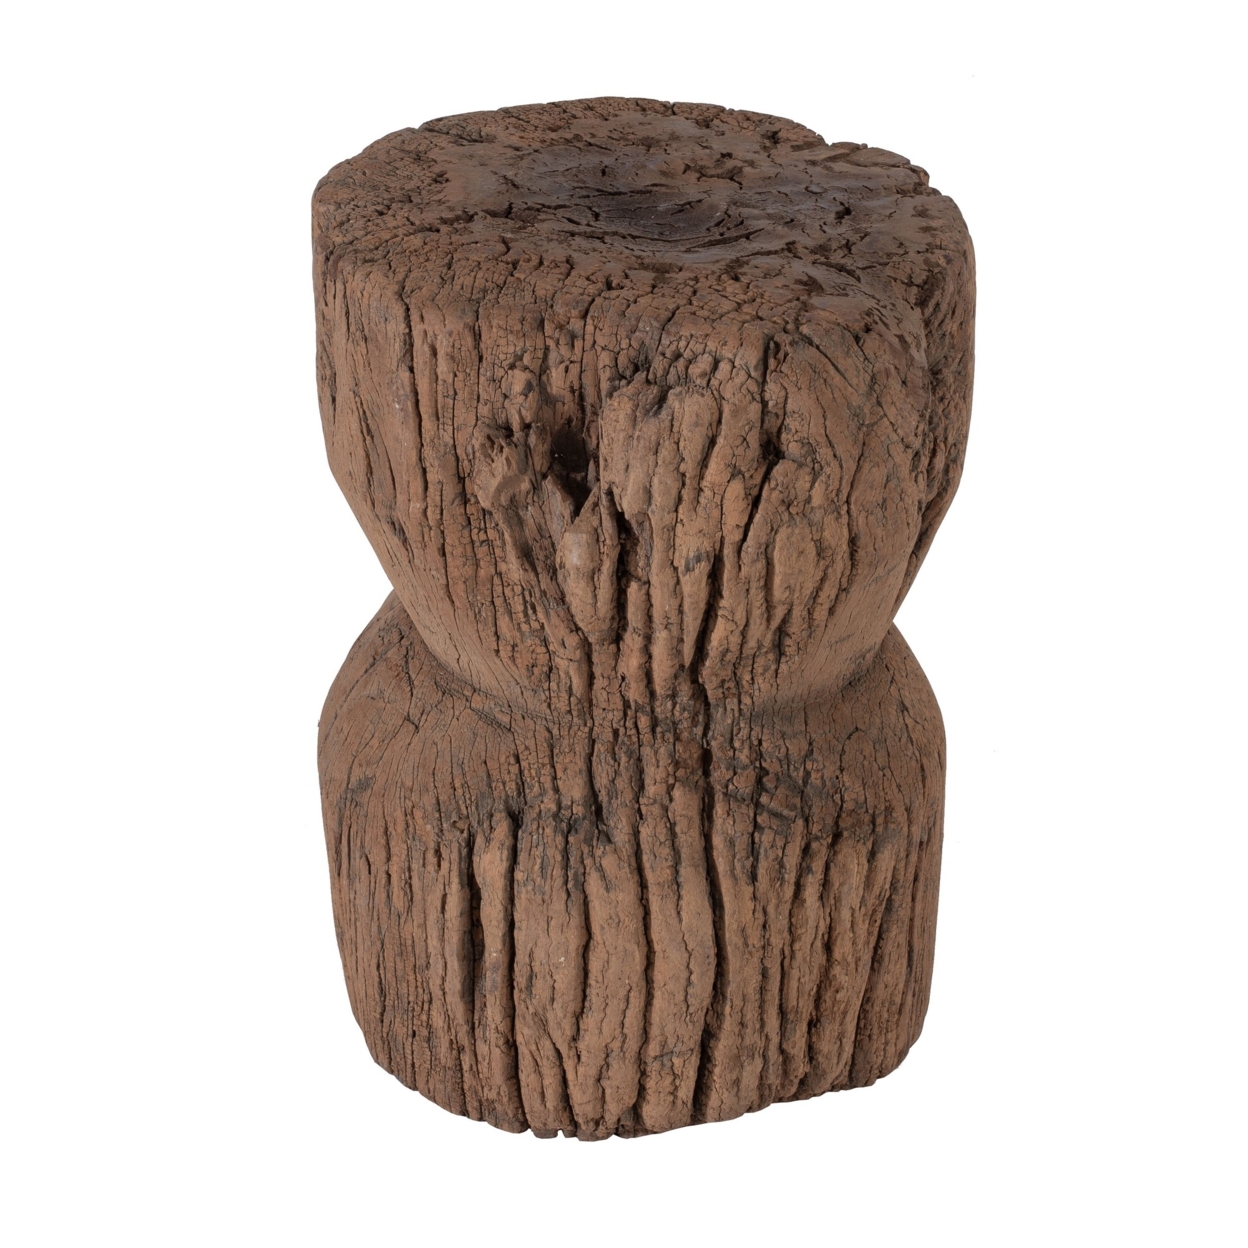 21 Inch Accent Stool, Natural Textured Rustic Wood Log Design, Brown- Saltoro Sherpi